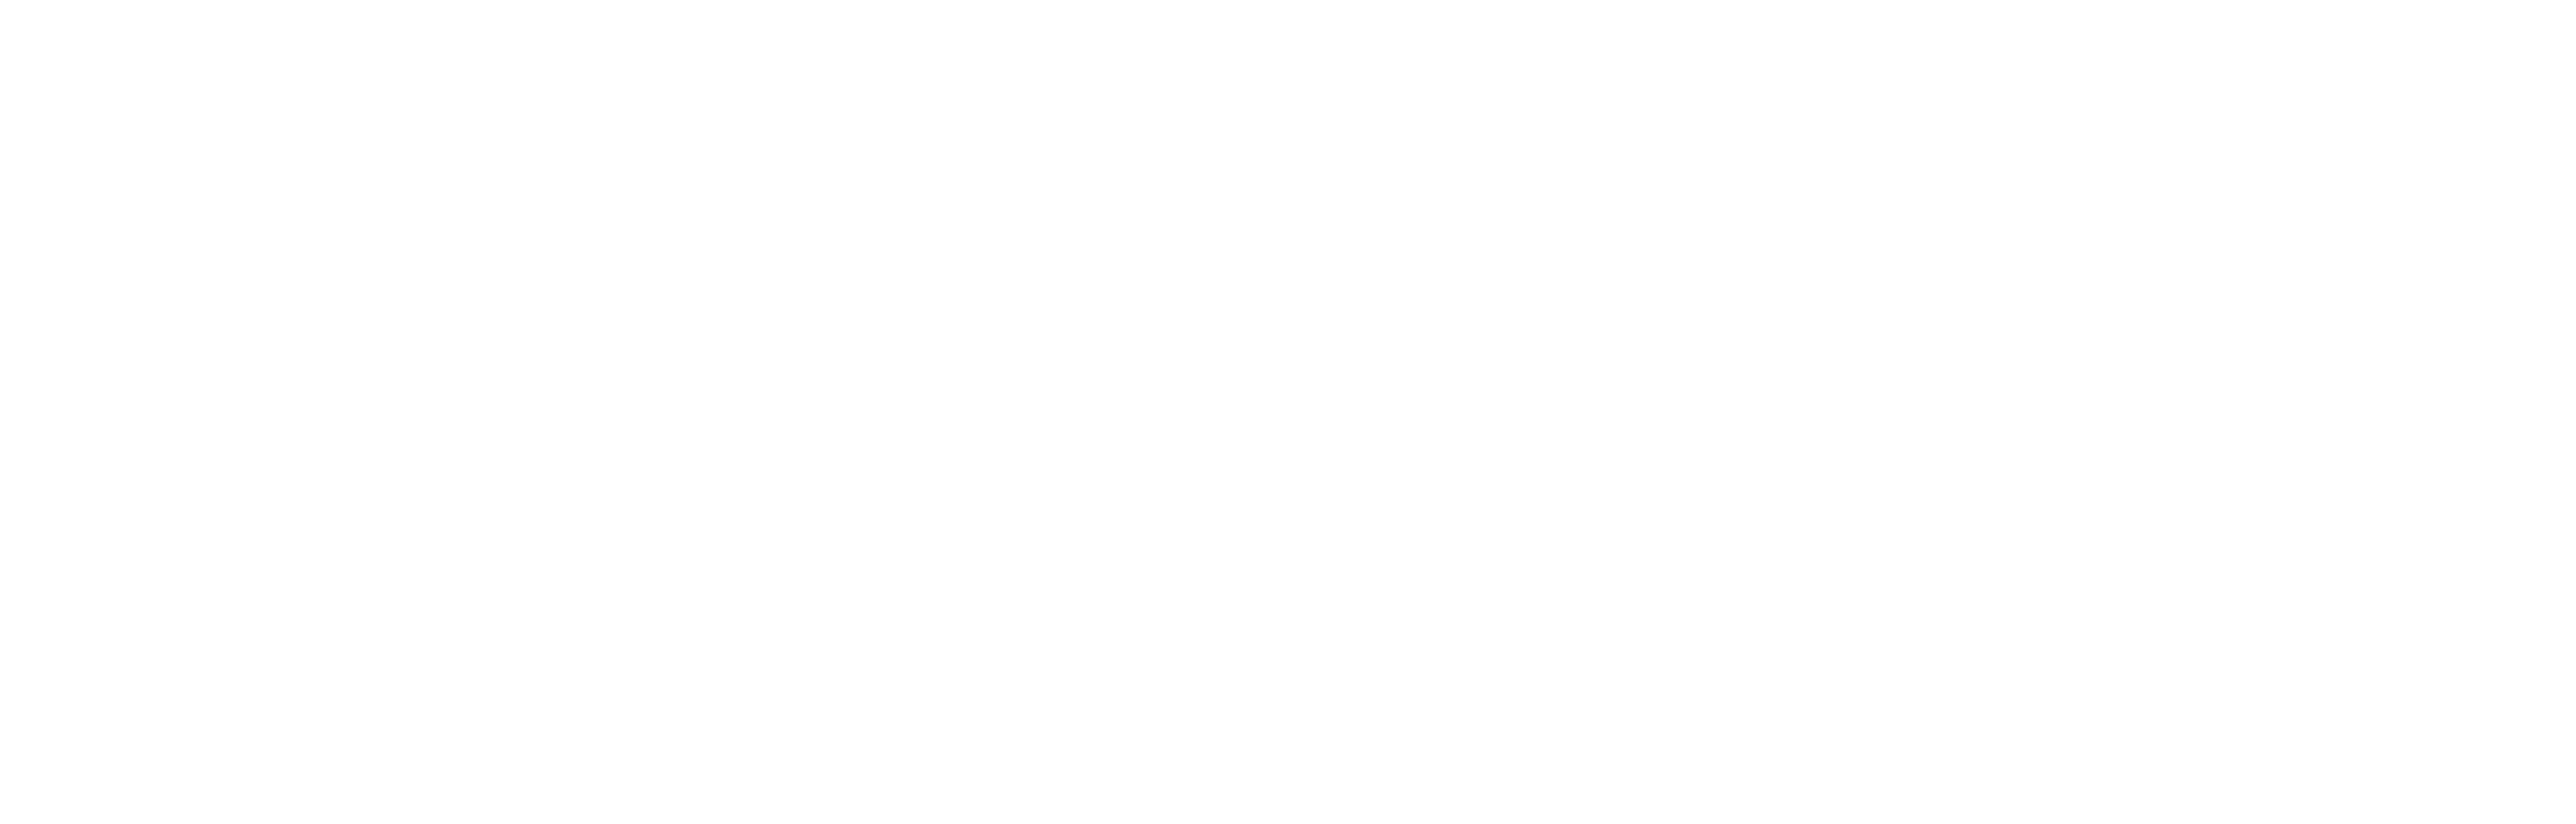 DigitalPlat